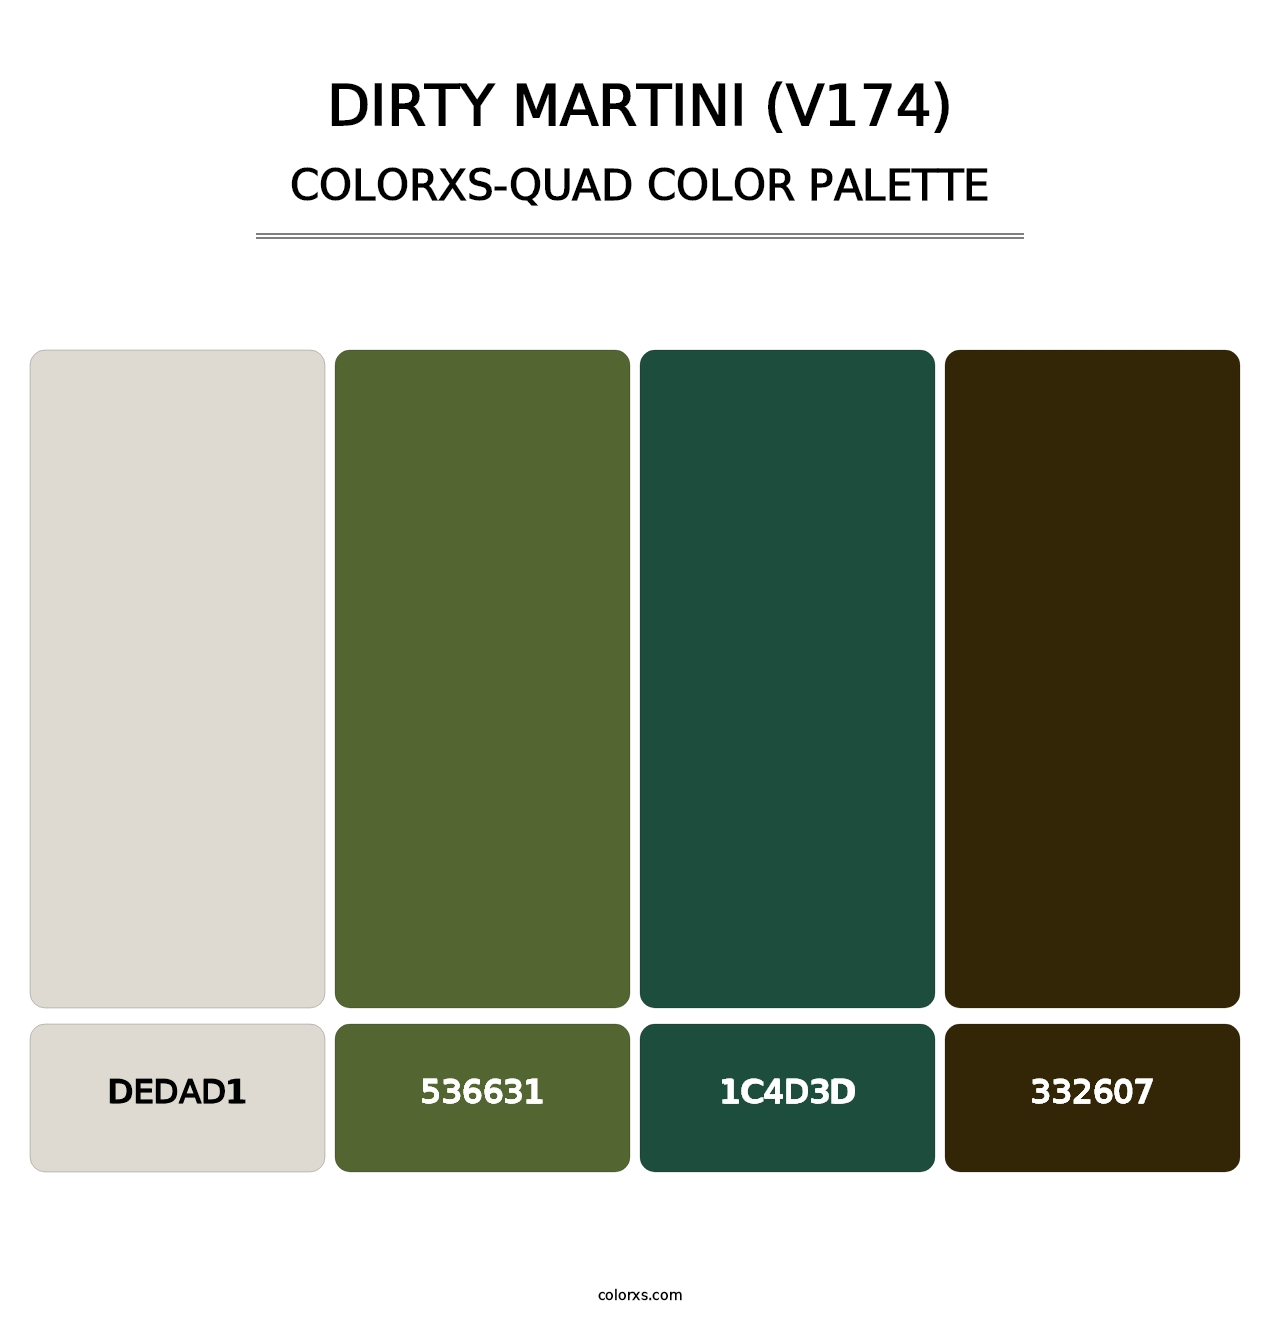 Dirty Martini (V174) - Colorxs Quad Palette